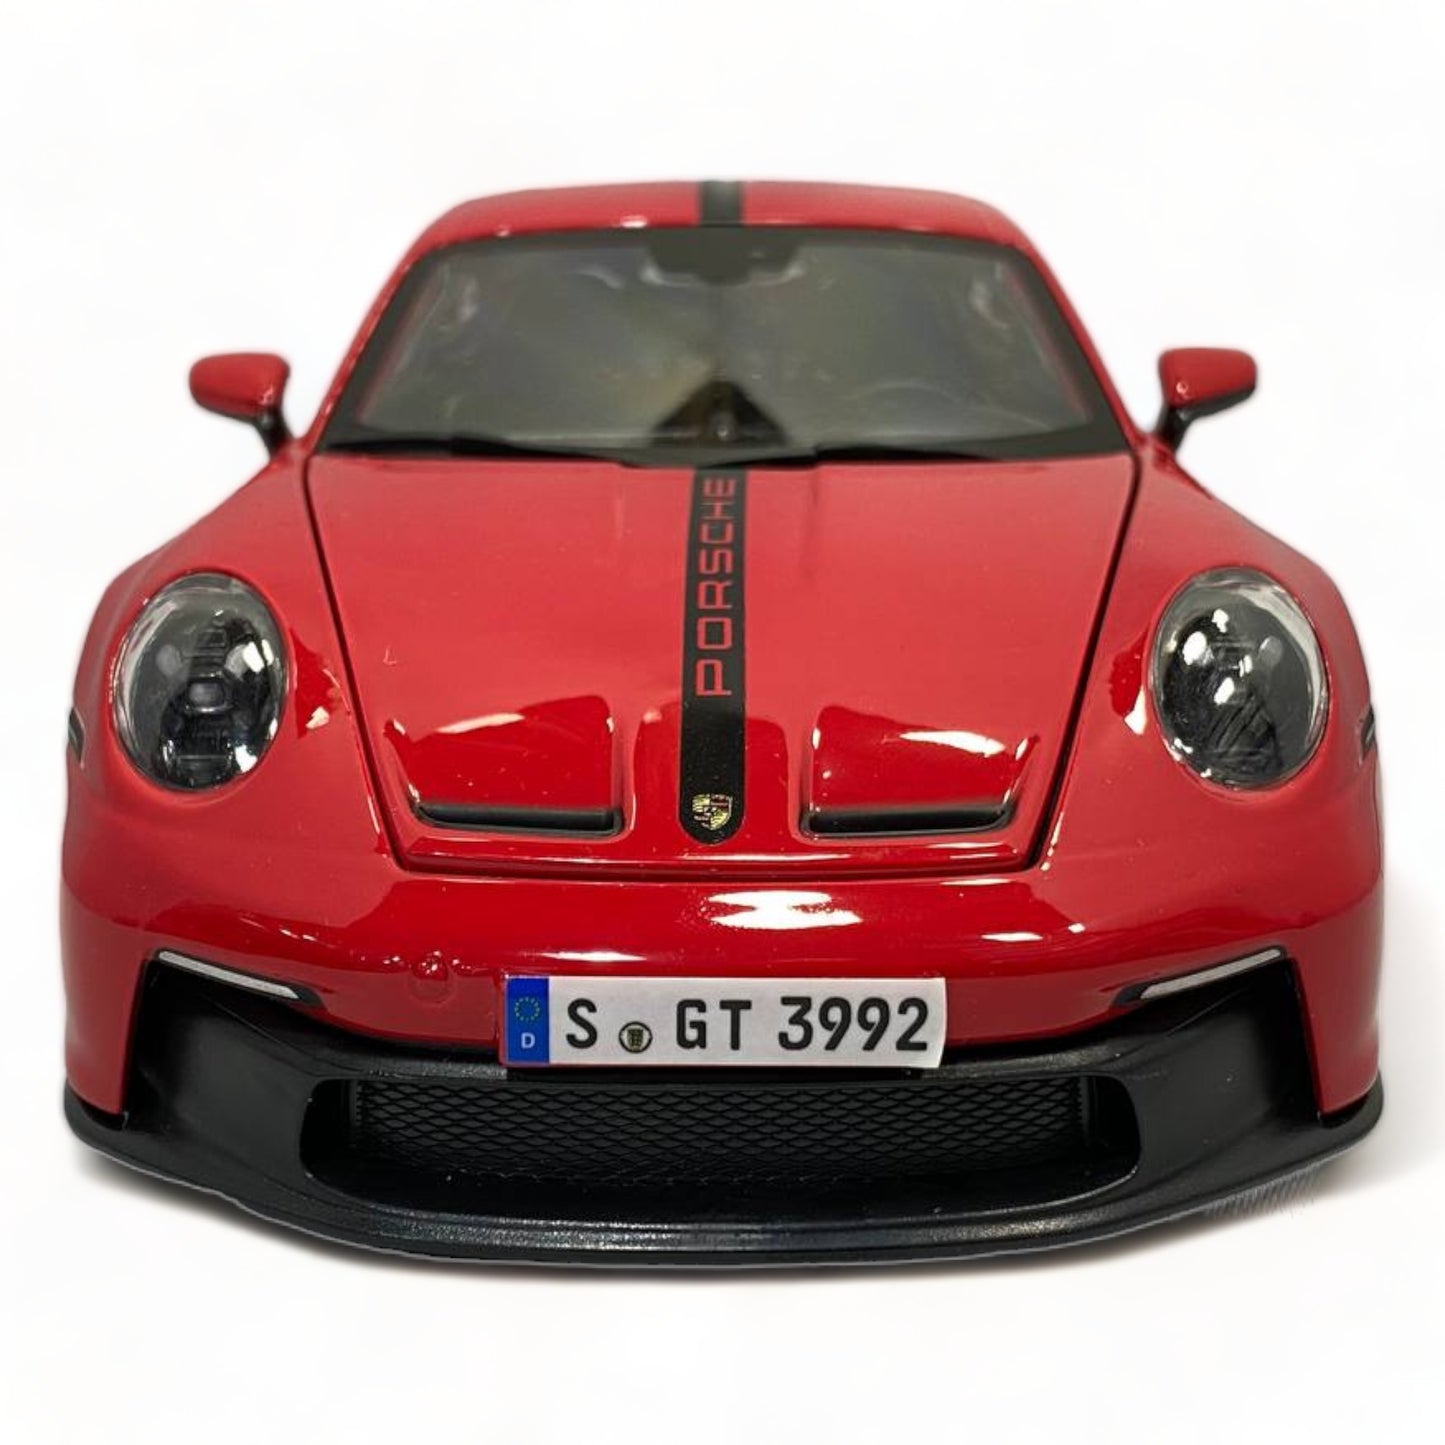 1/18 Diecast Metal Maisto Porsche 911 GT3 Red Model Car